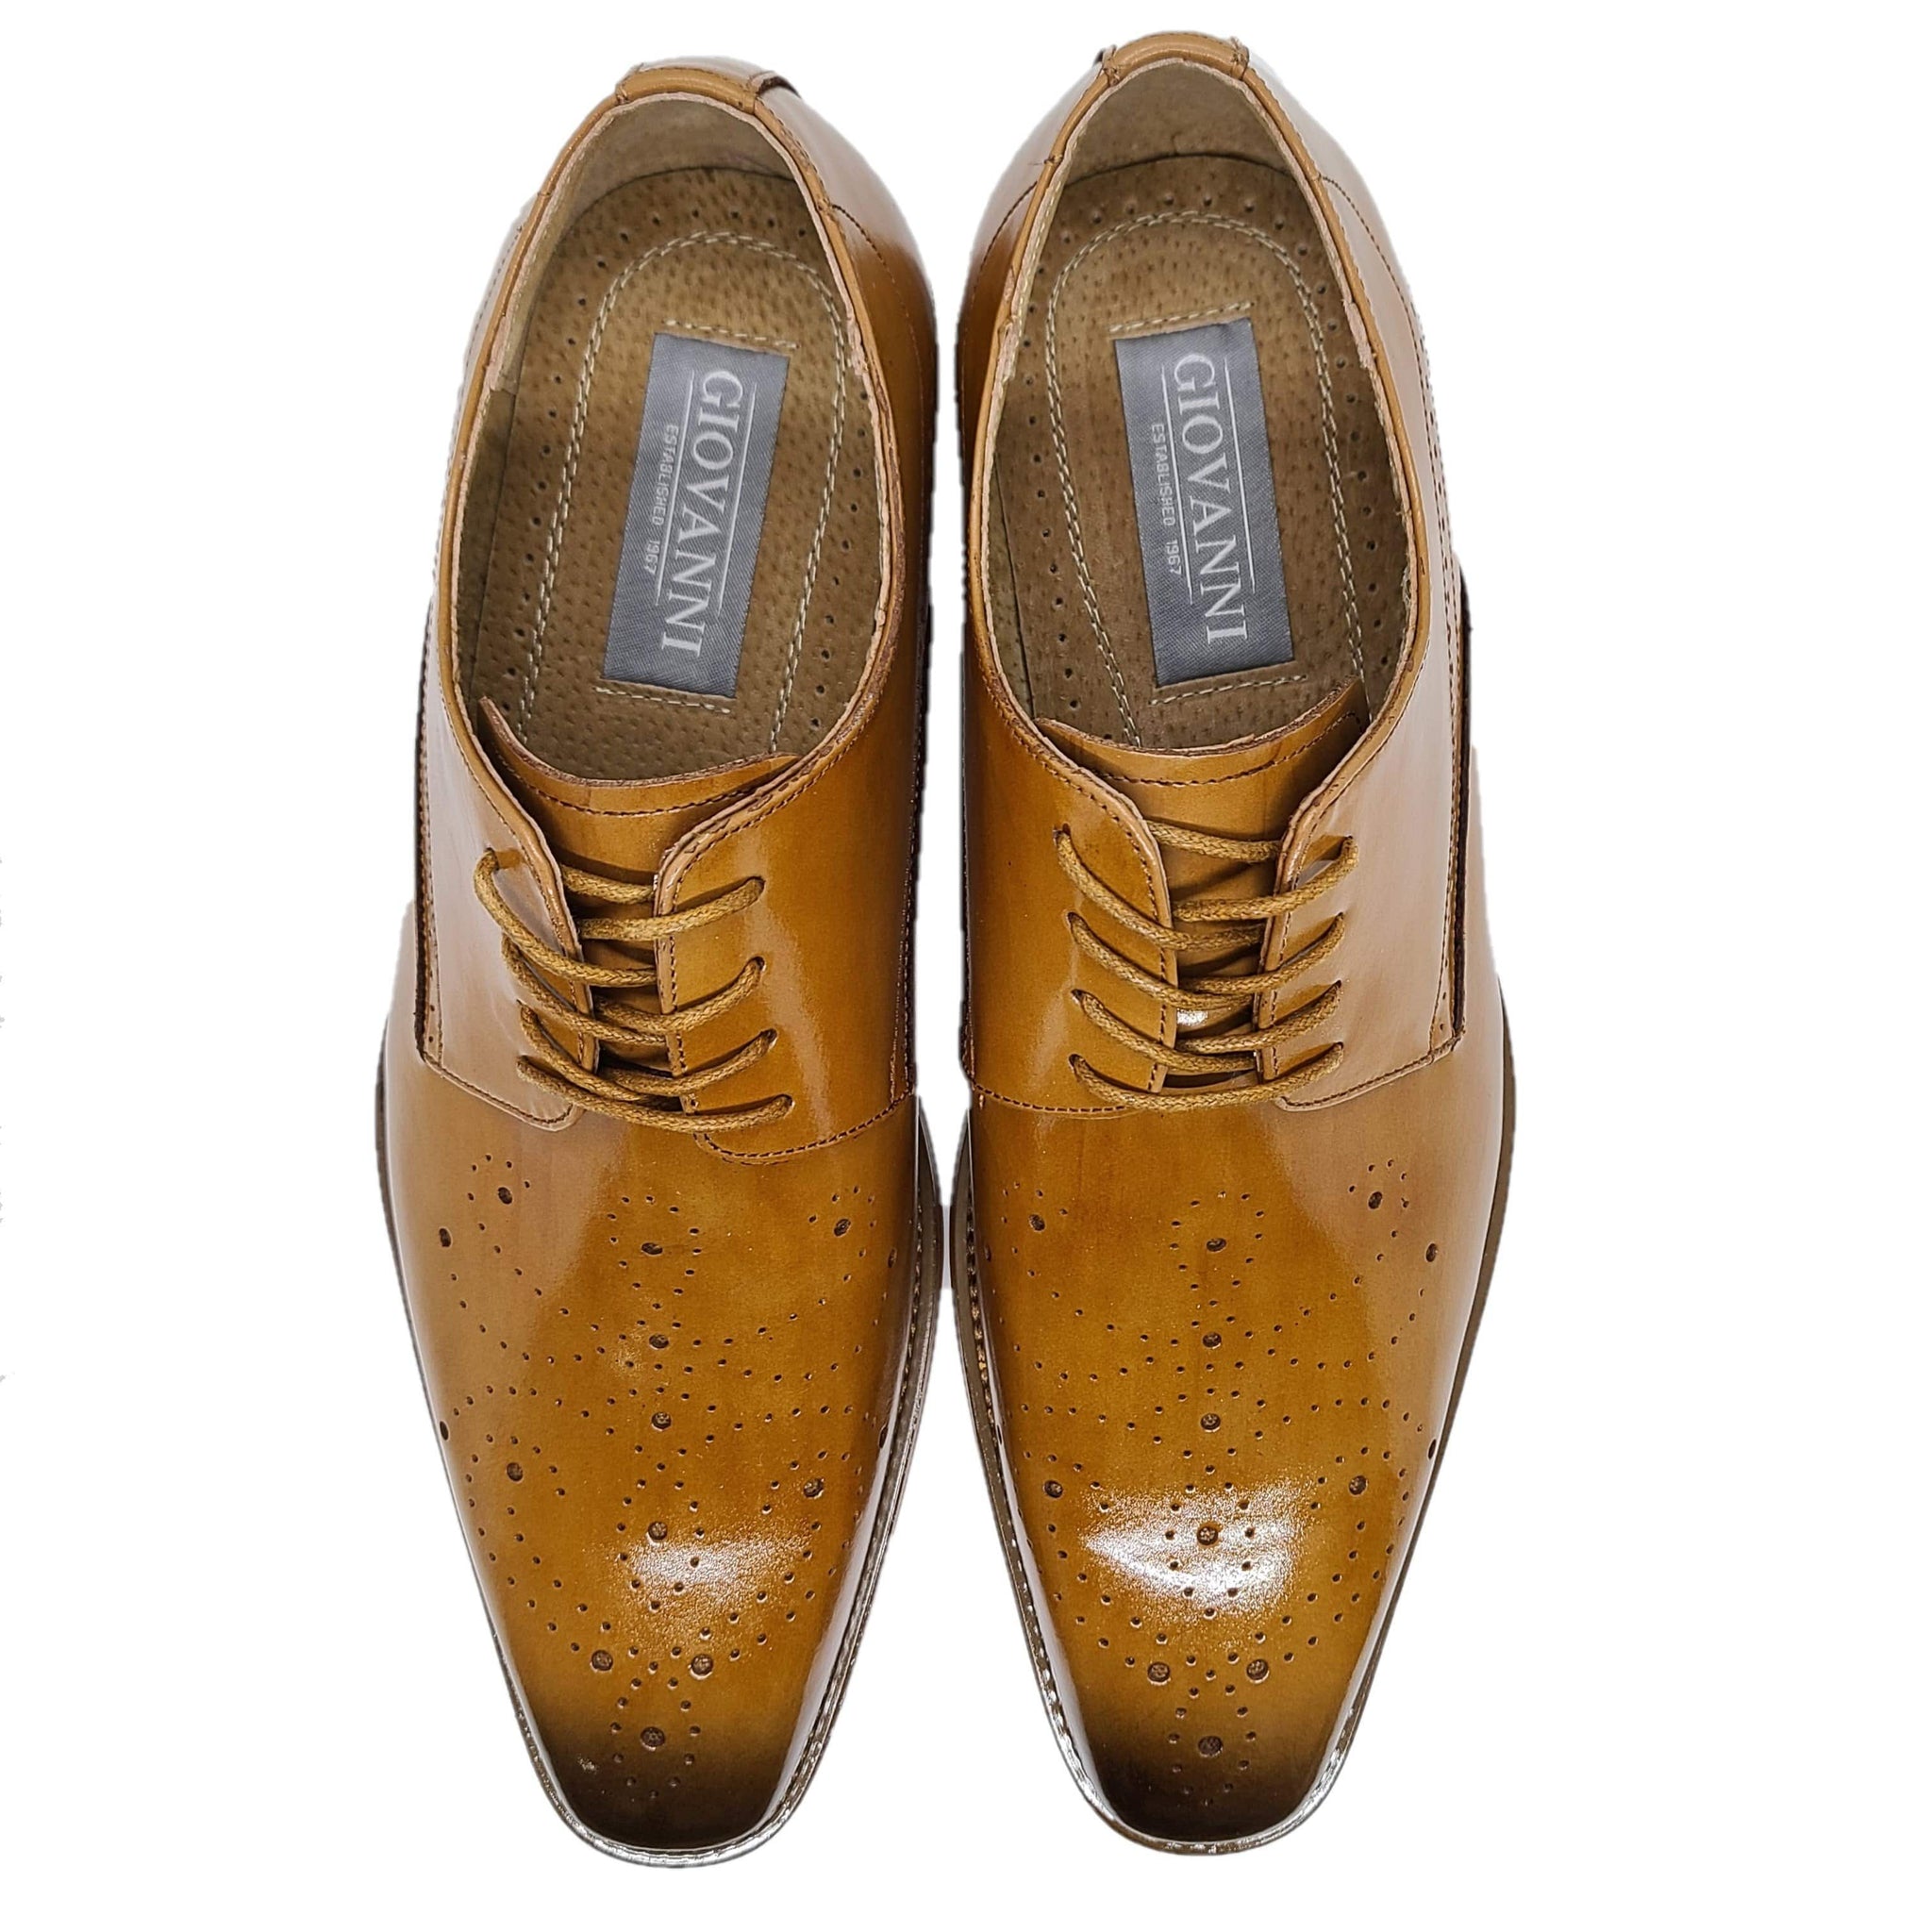 Giovanni Tan Leather Oxford Shoe